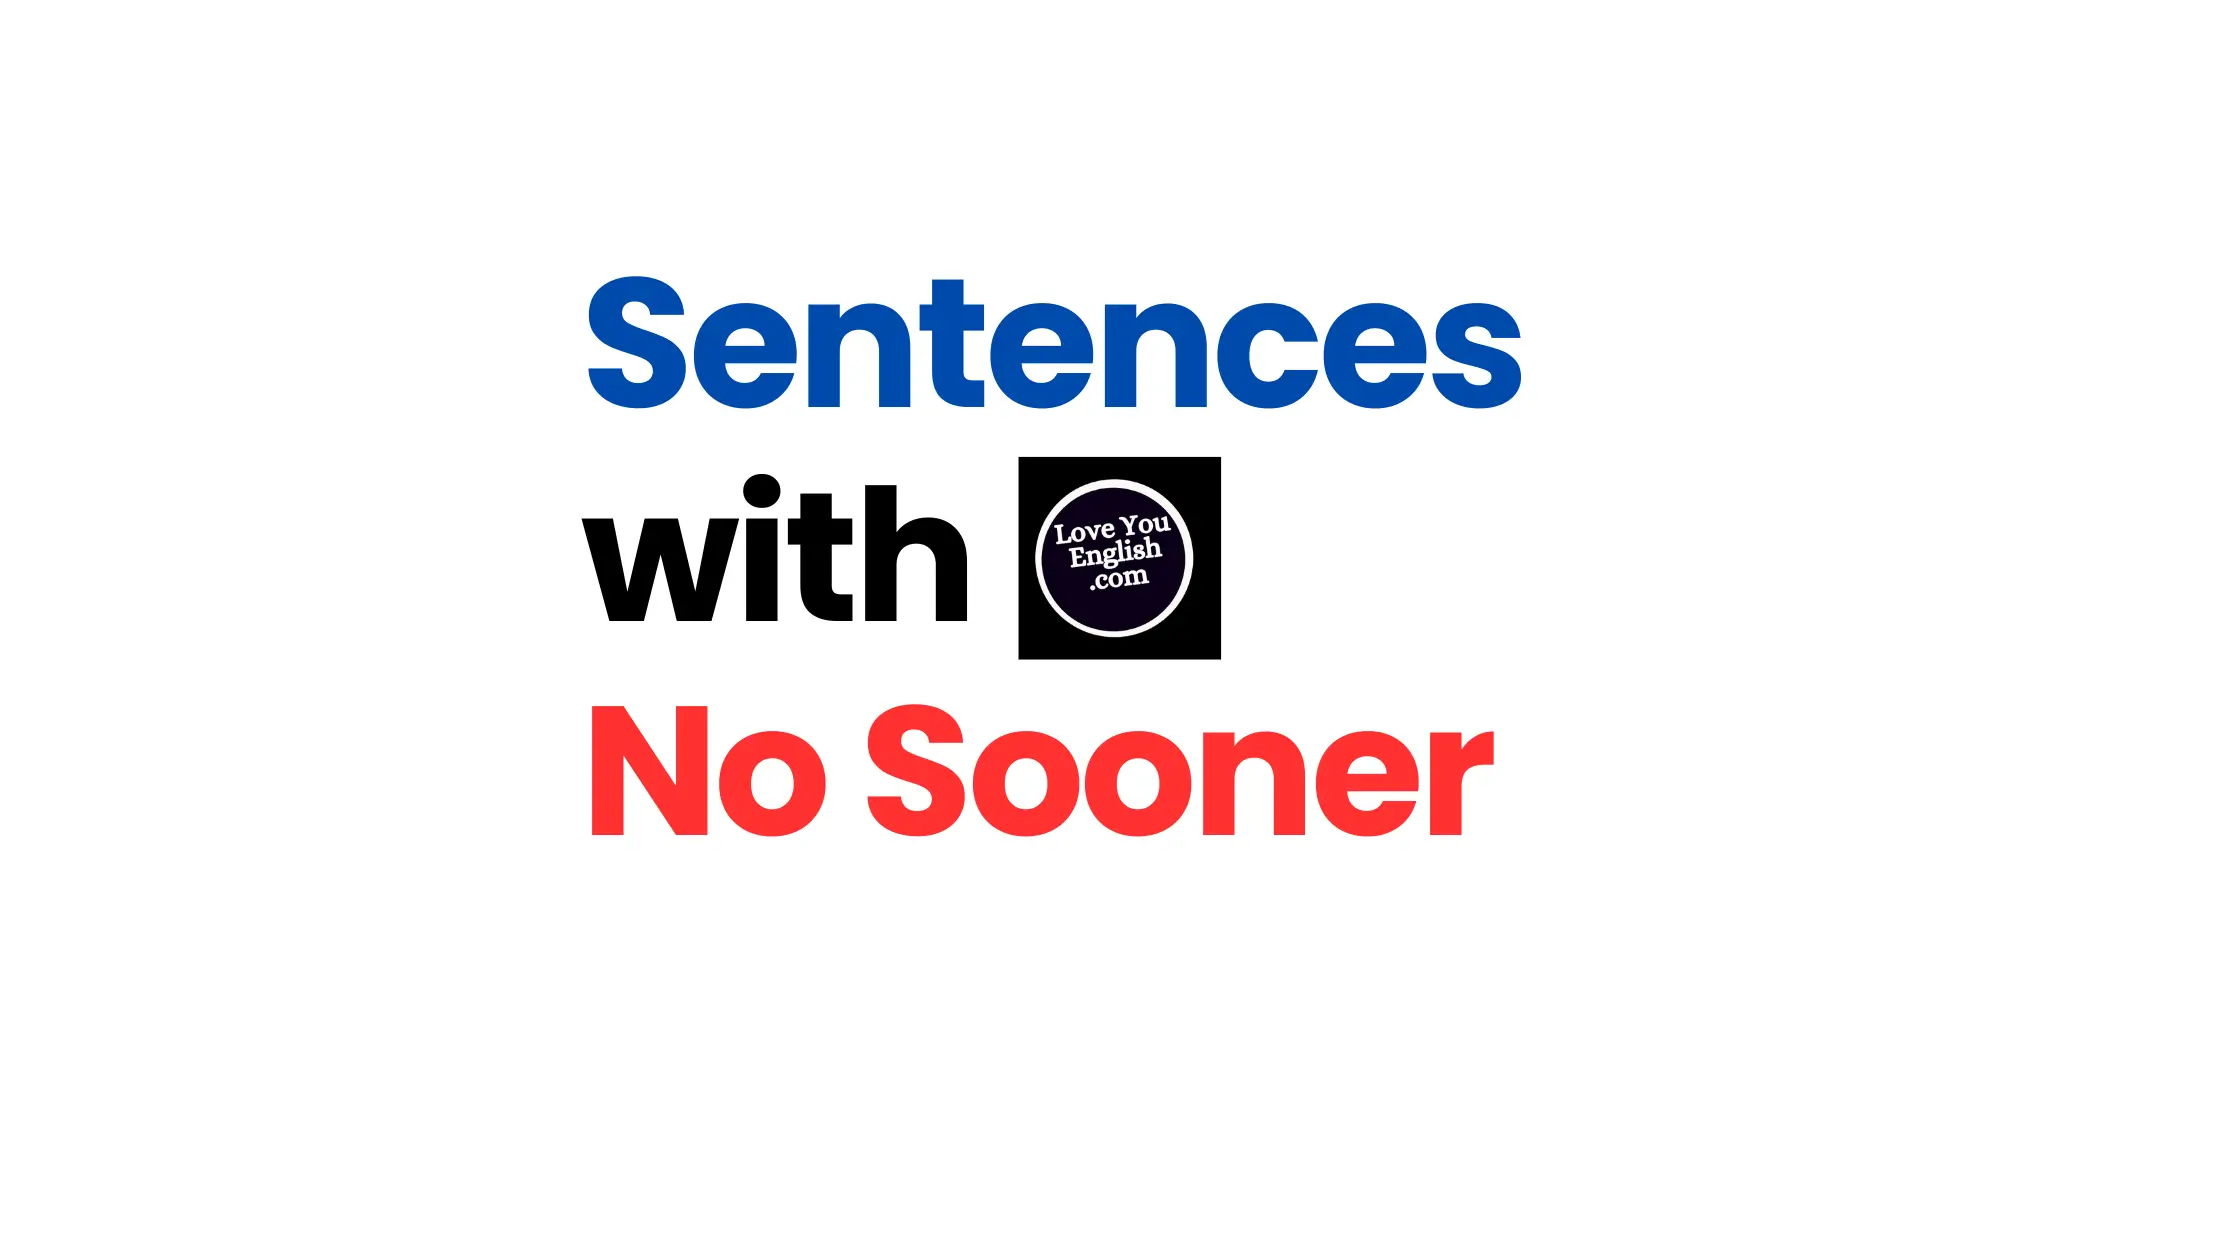 Sentences with "No sooner"